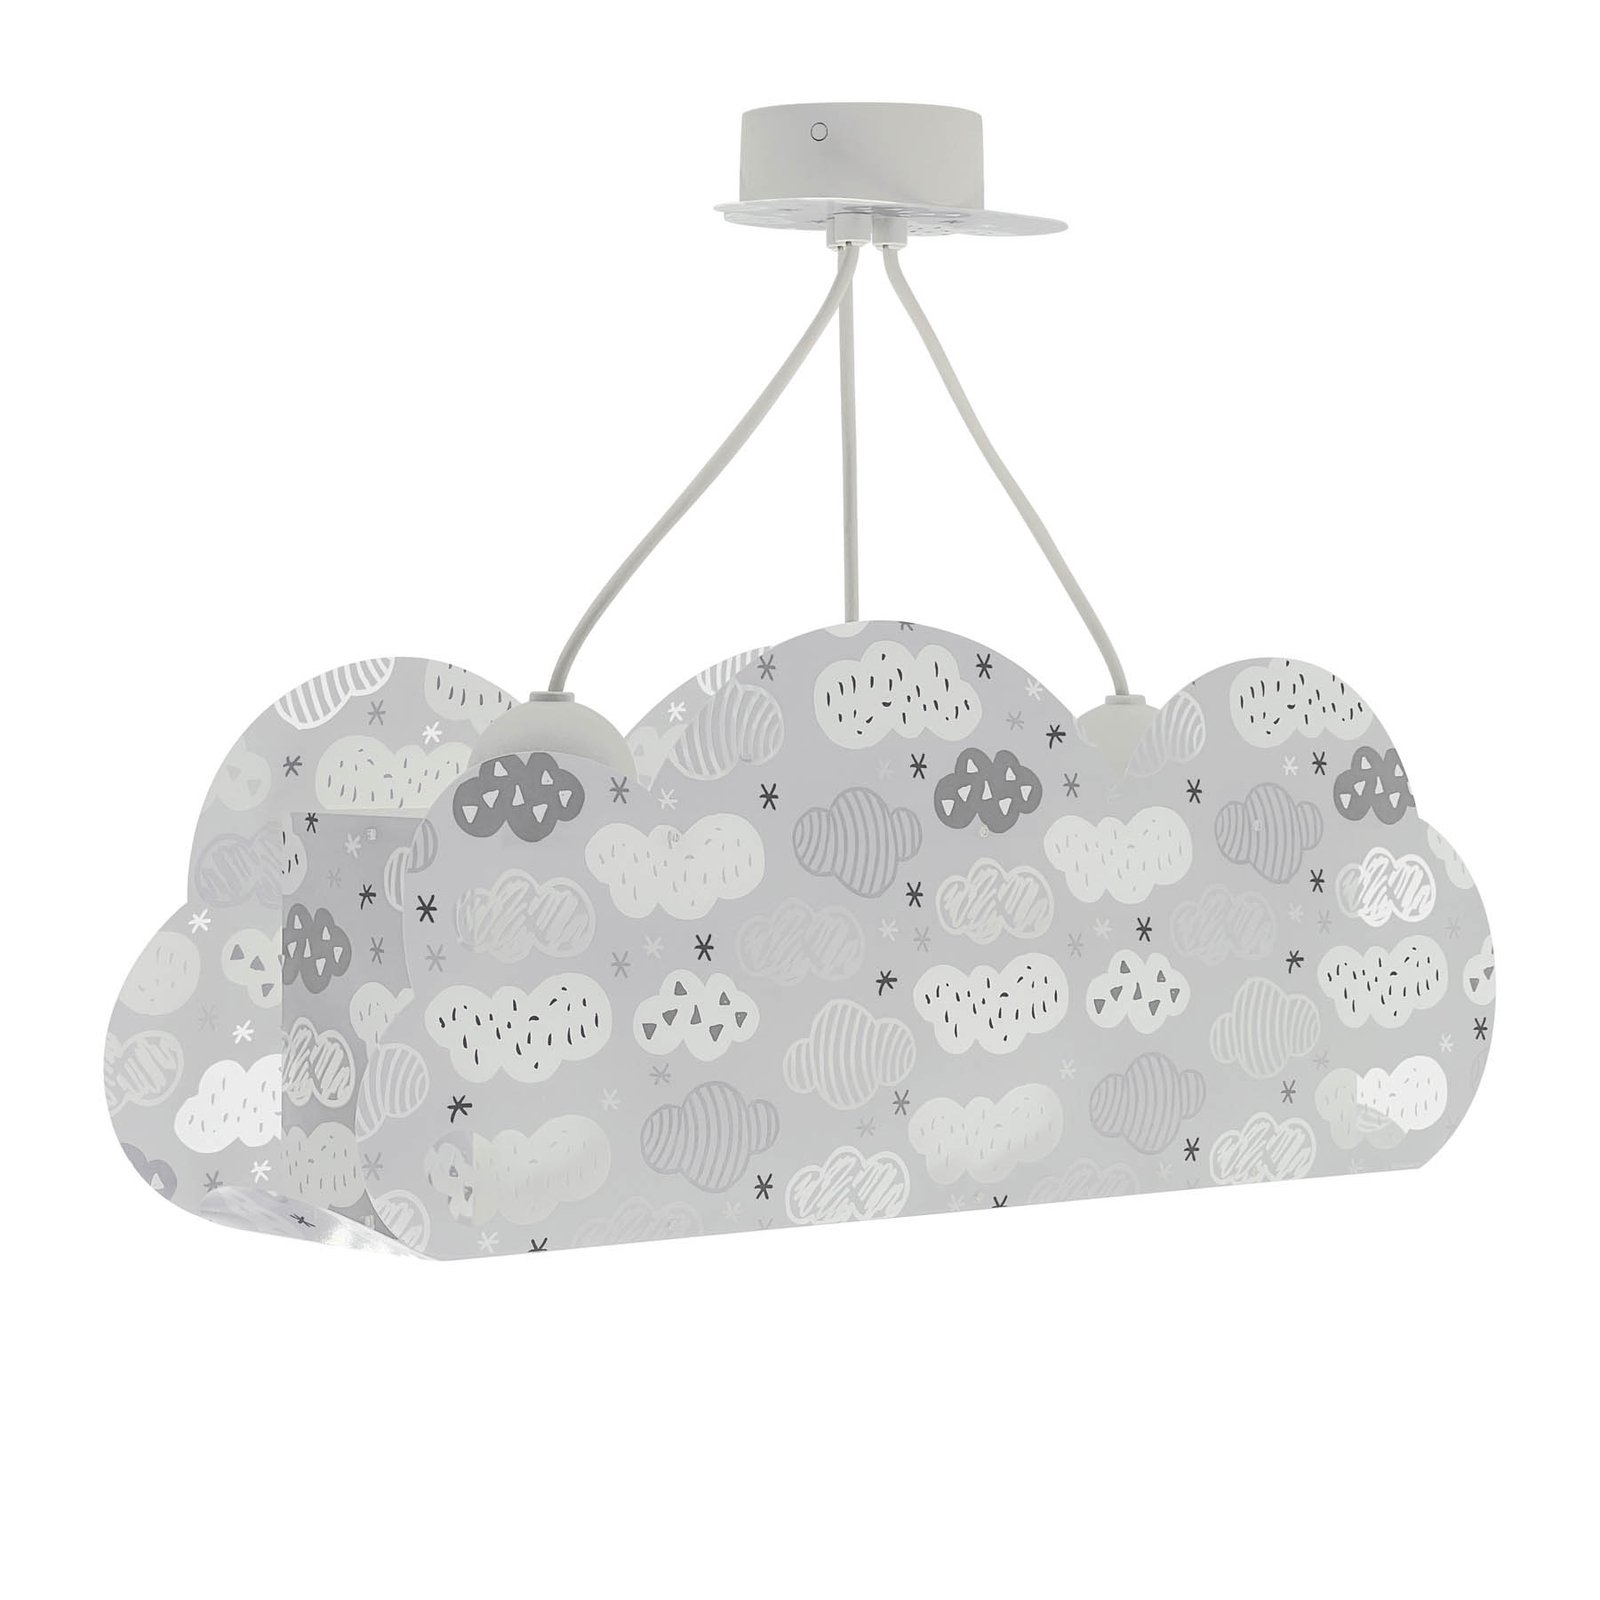 Dalber Cloud Grey pendant light in the shape of a cloud, grey